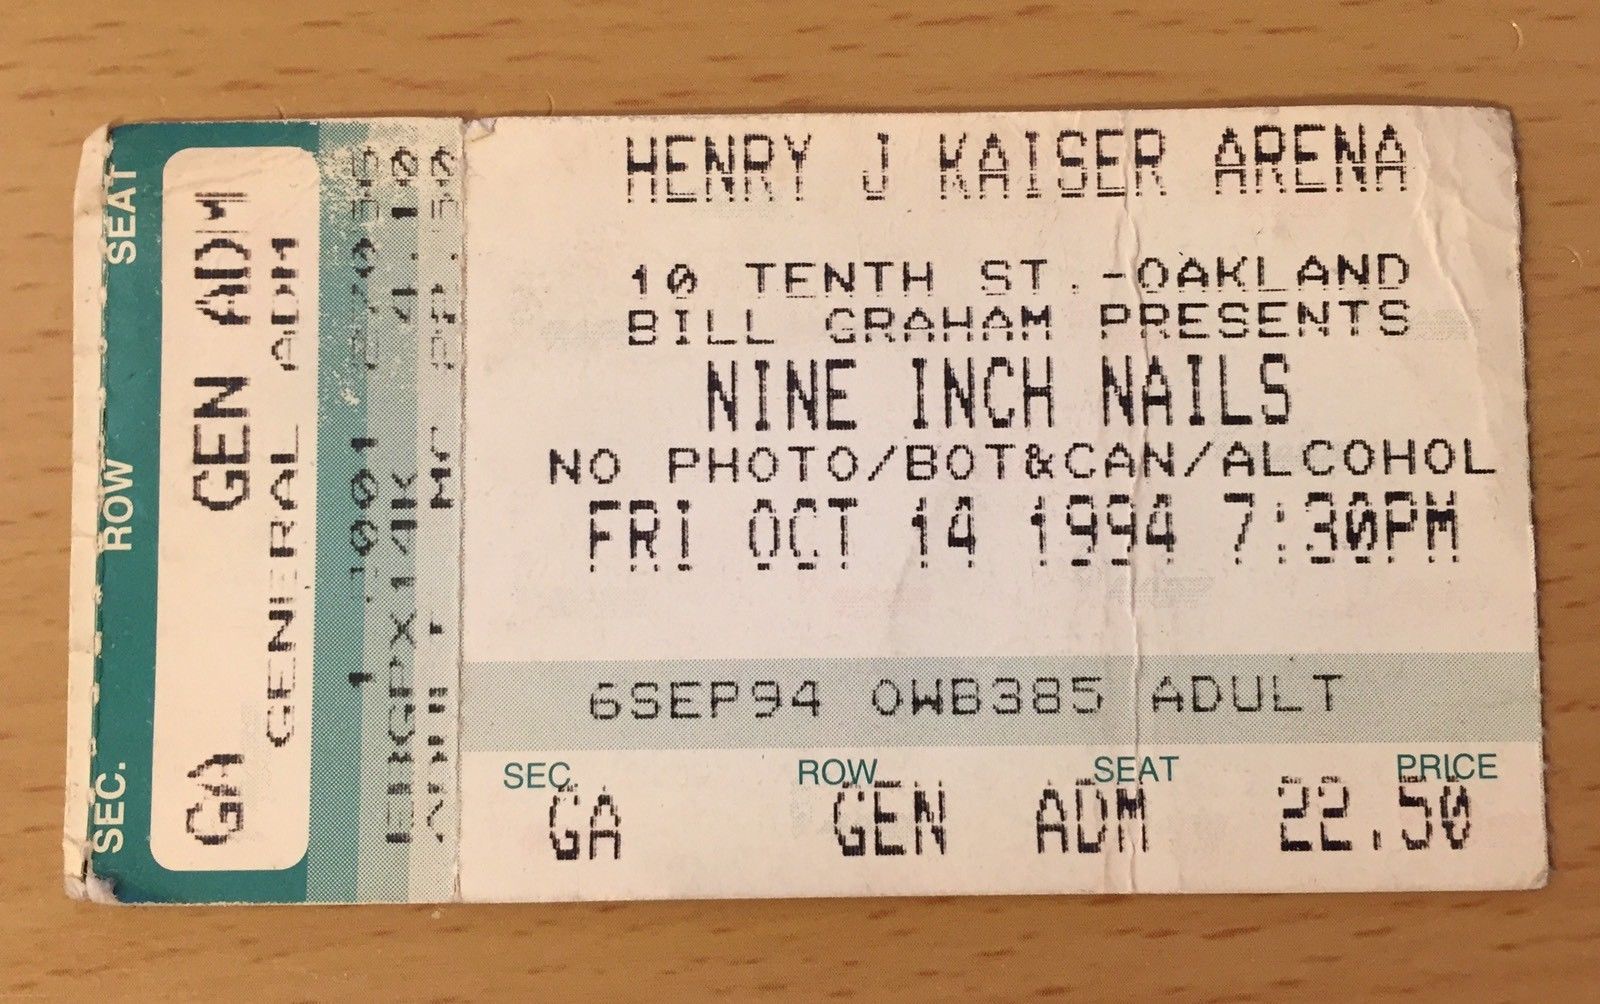 1994/10/14 Ticket